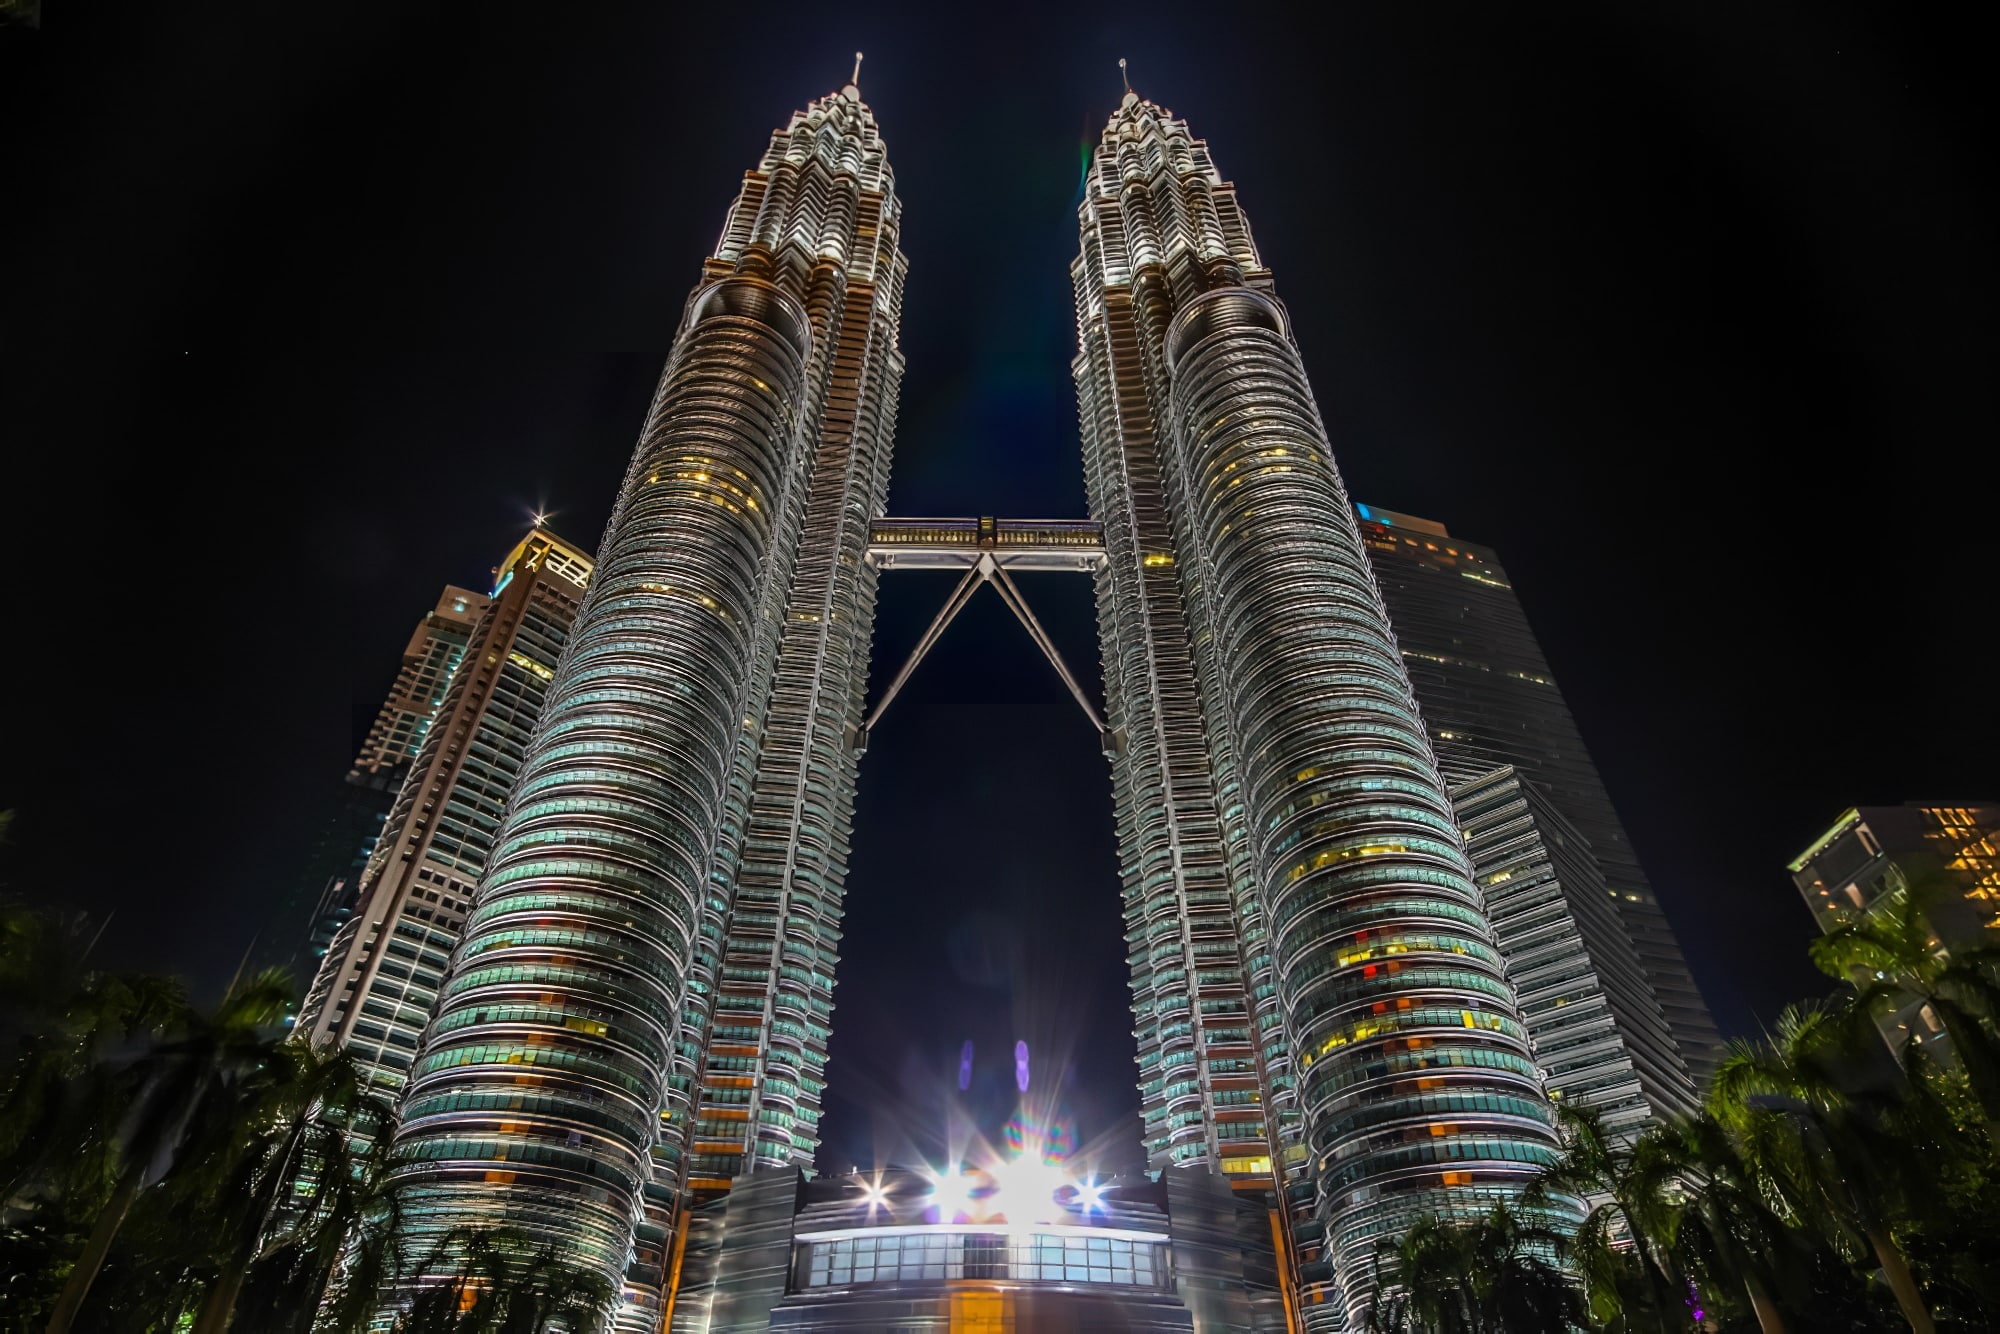 Petronas veut ramener le Grand Prix de Malaisie au calendrier